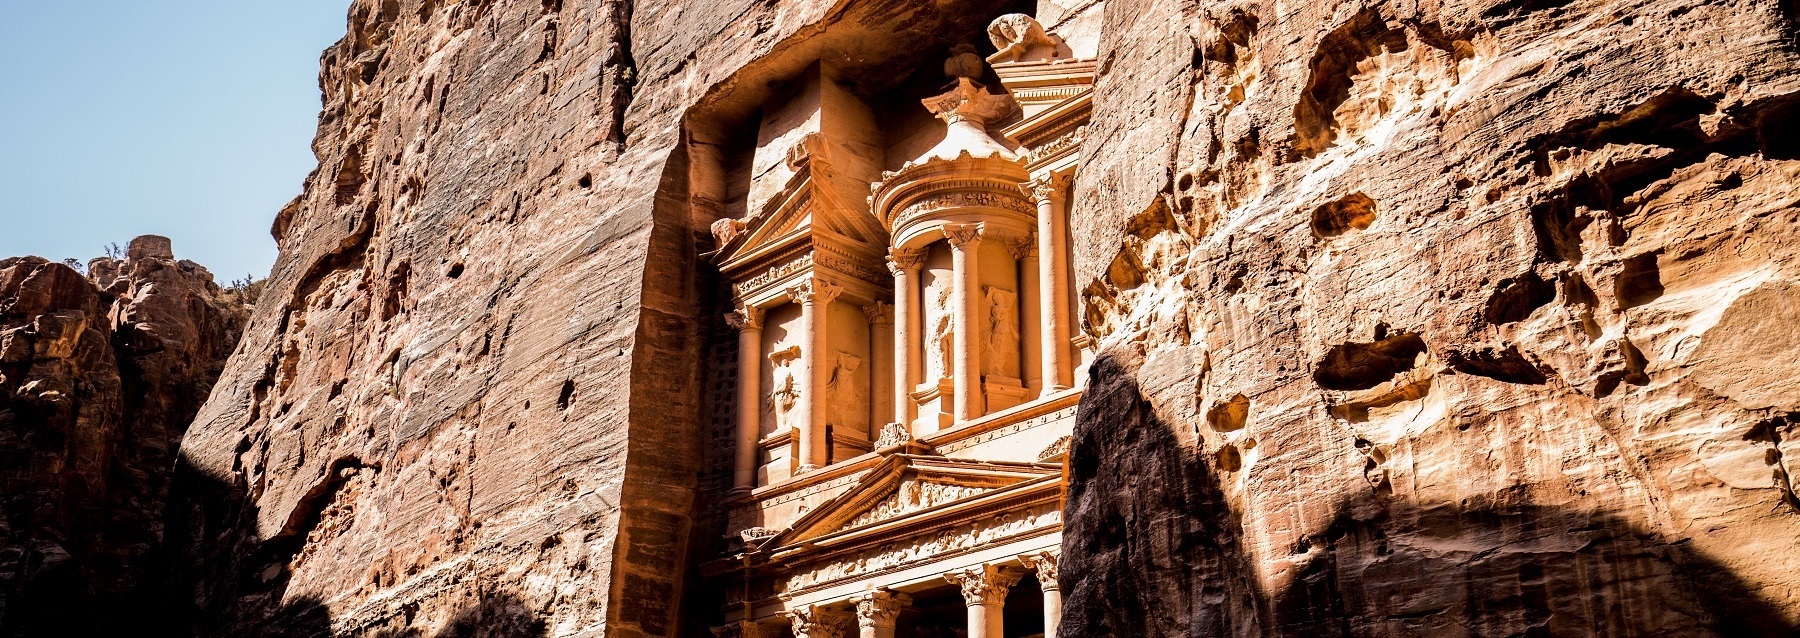 Travel Agency in Jordan - visit Jordan- Visit Petra- Dead sea Jordan